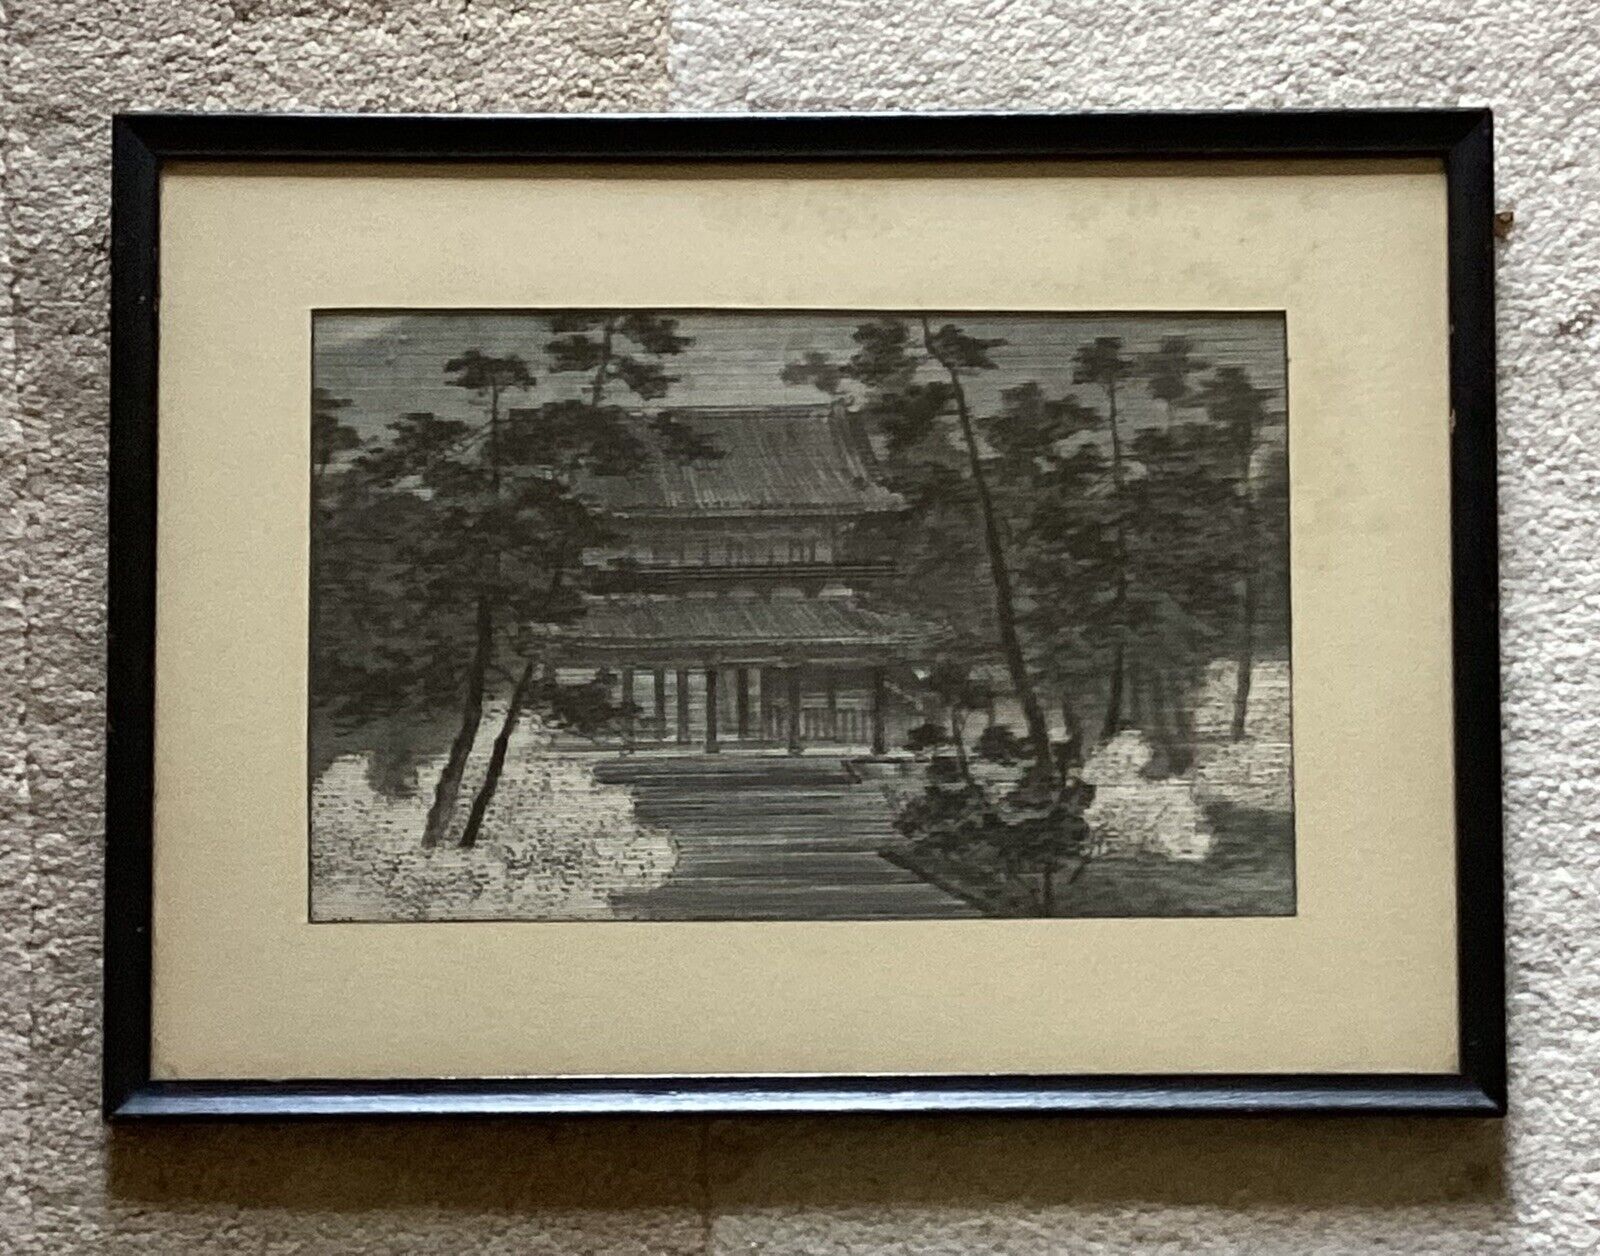 VTG Japanese Knitting Art of a Palace/ Tomb, Framed